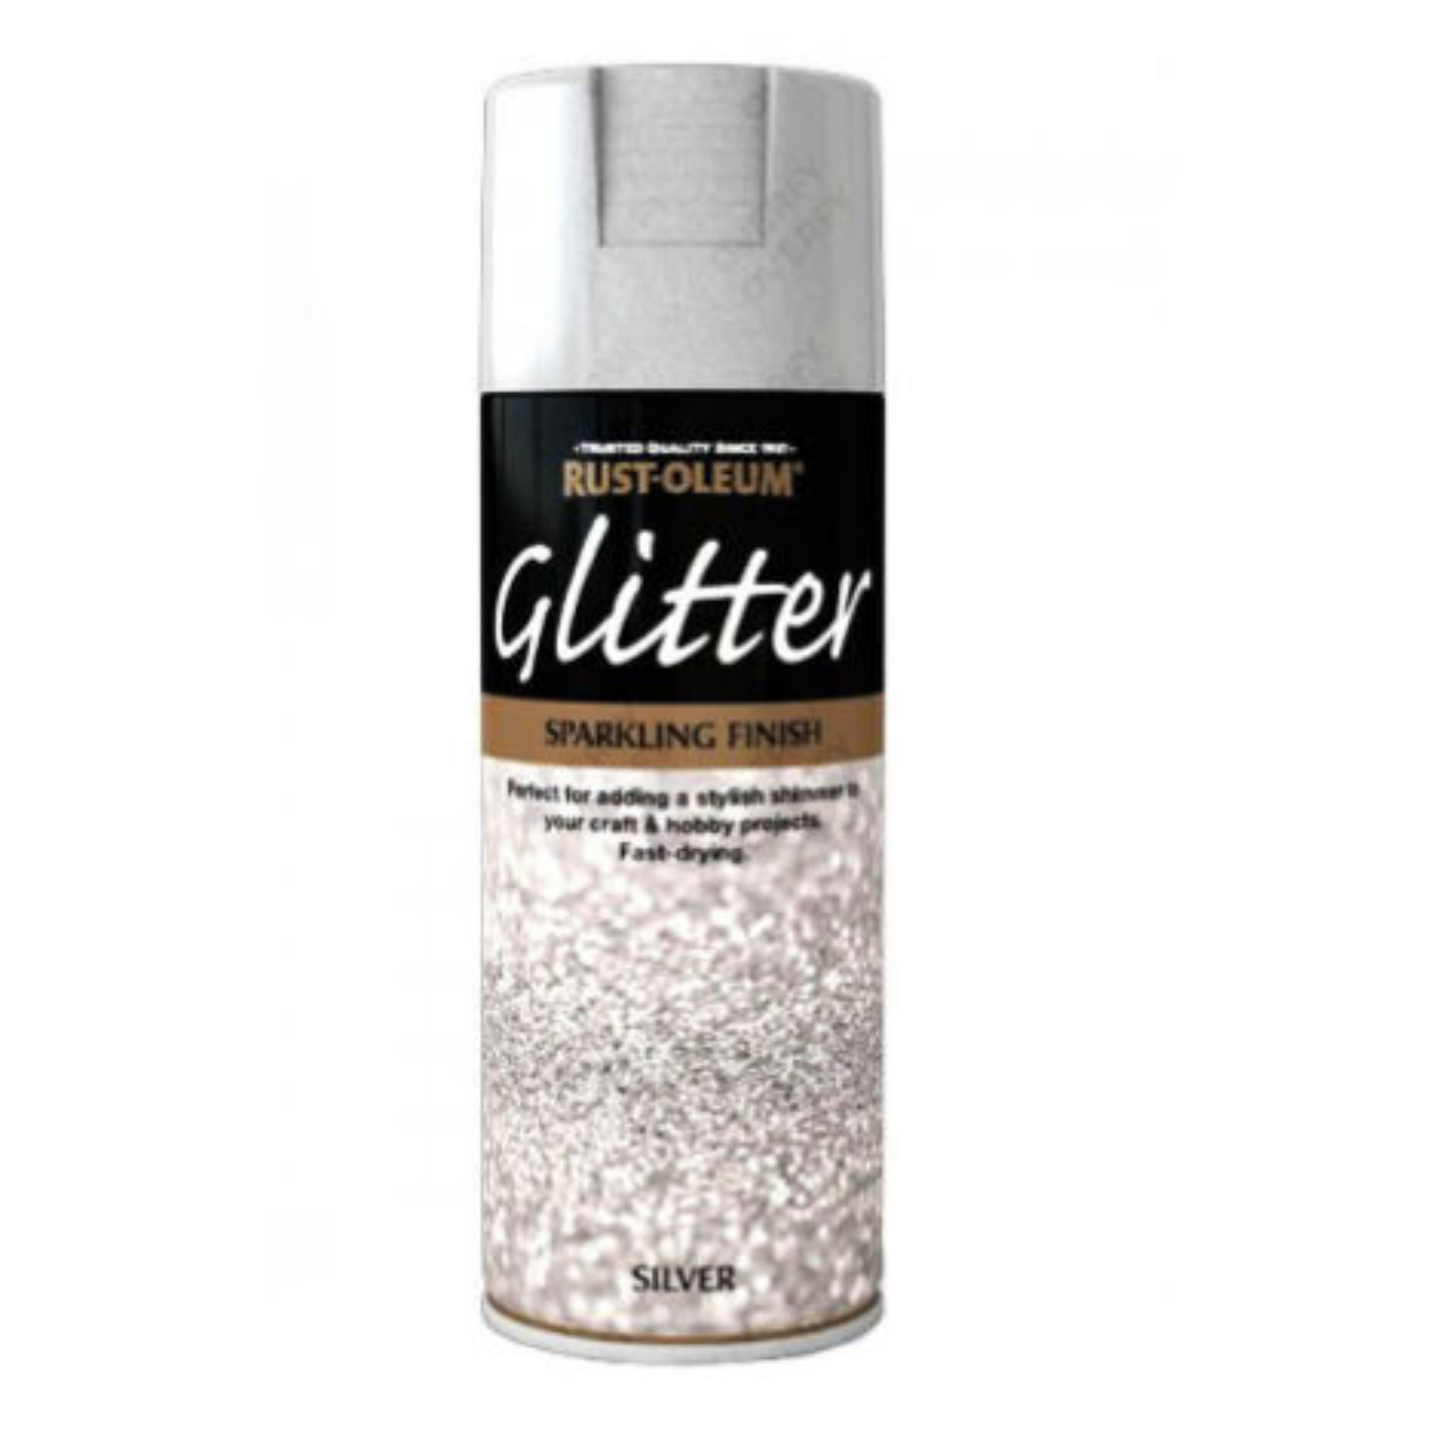 Rustoleum glitter spray silver